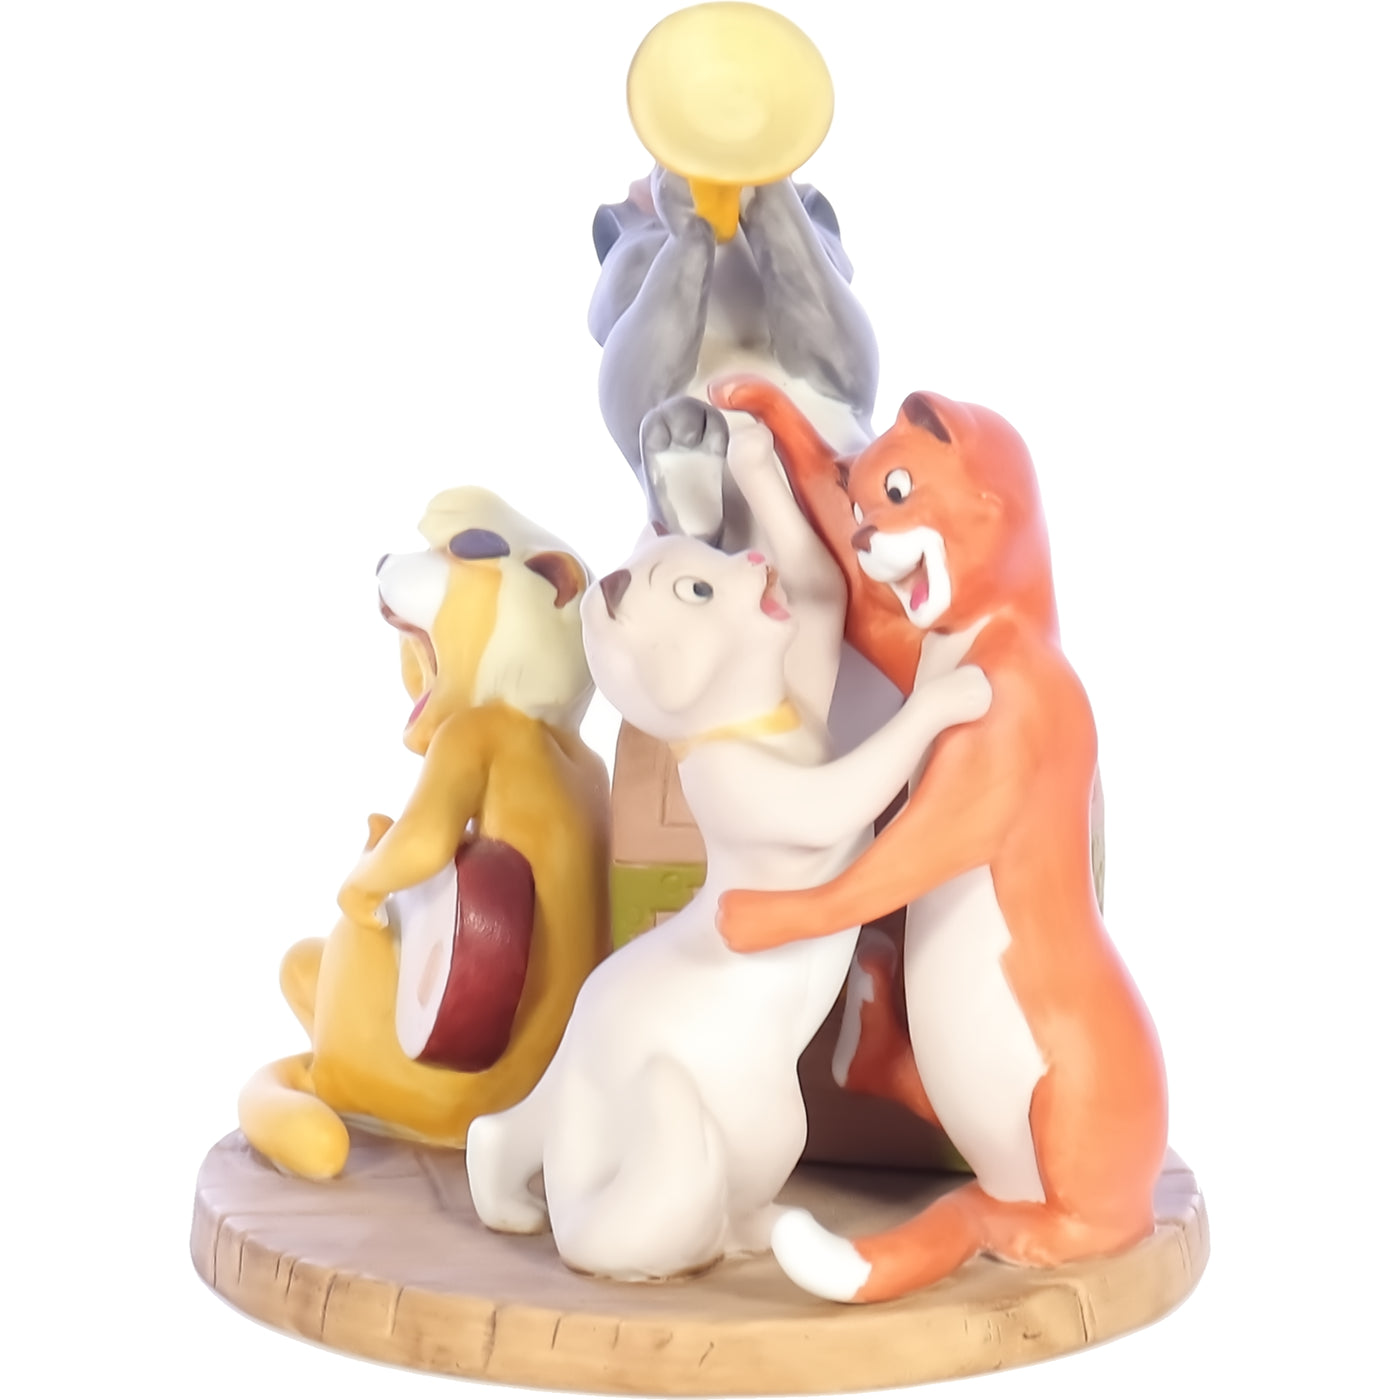 Disney's Magic Memories Porcelain Figurine Limited Edition The Aristocats 1980 6"